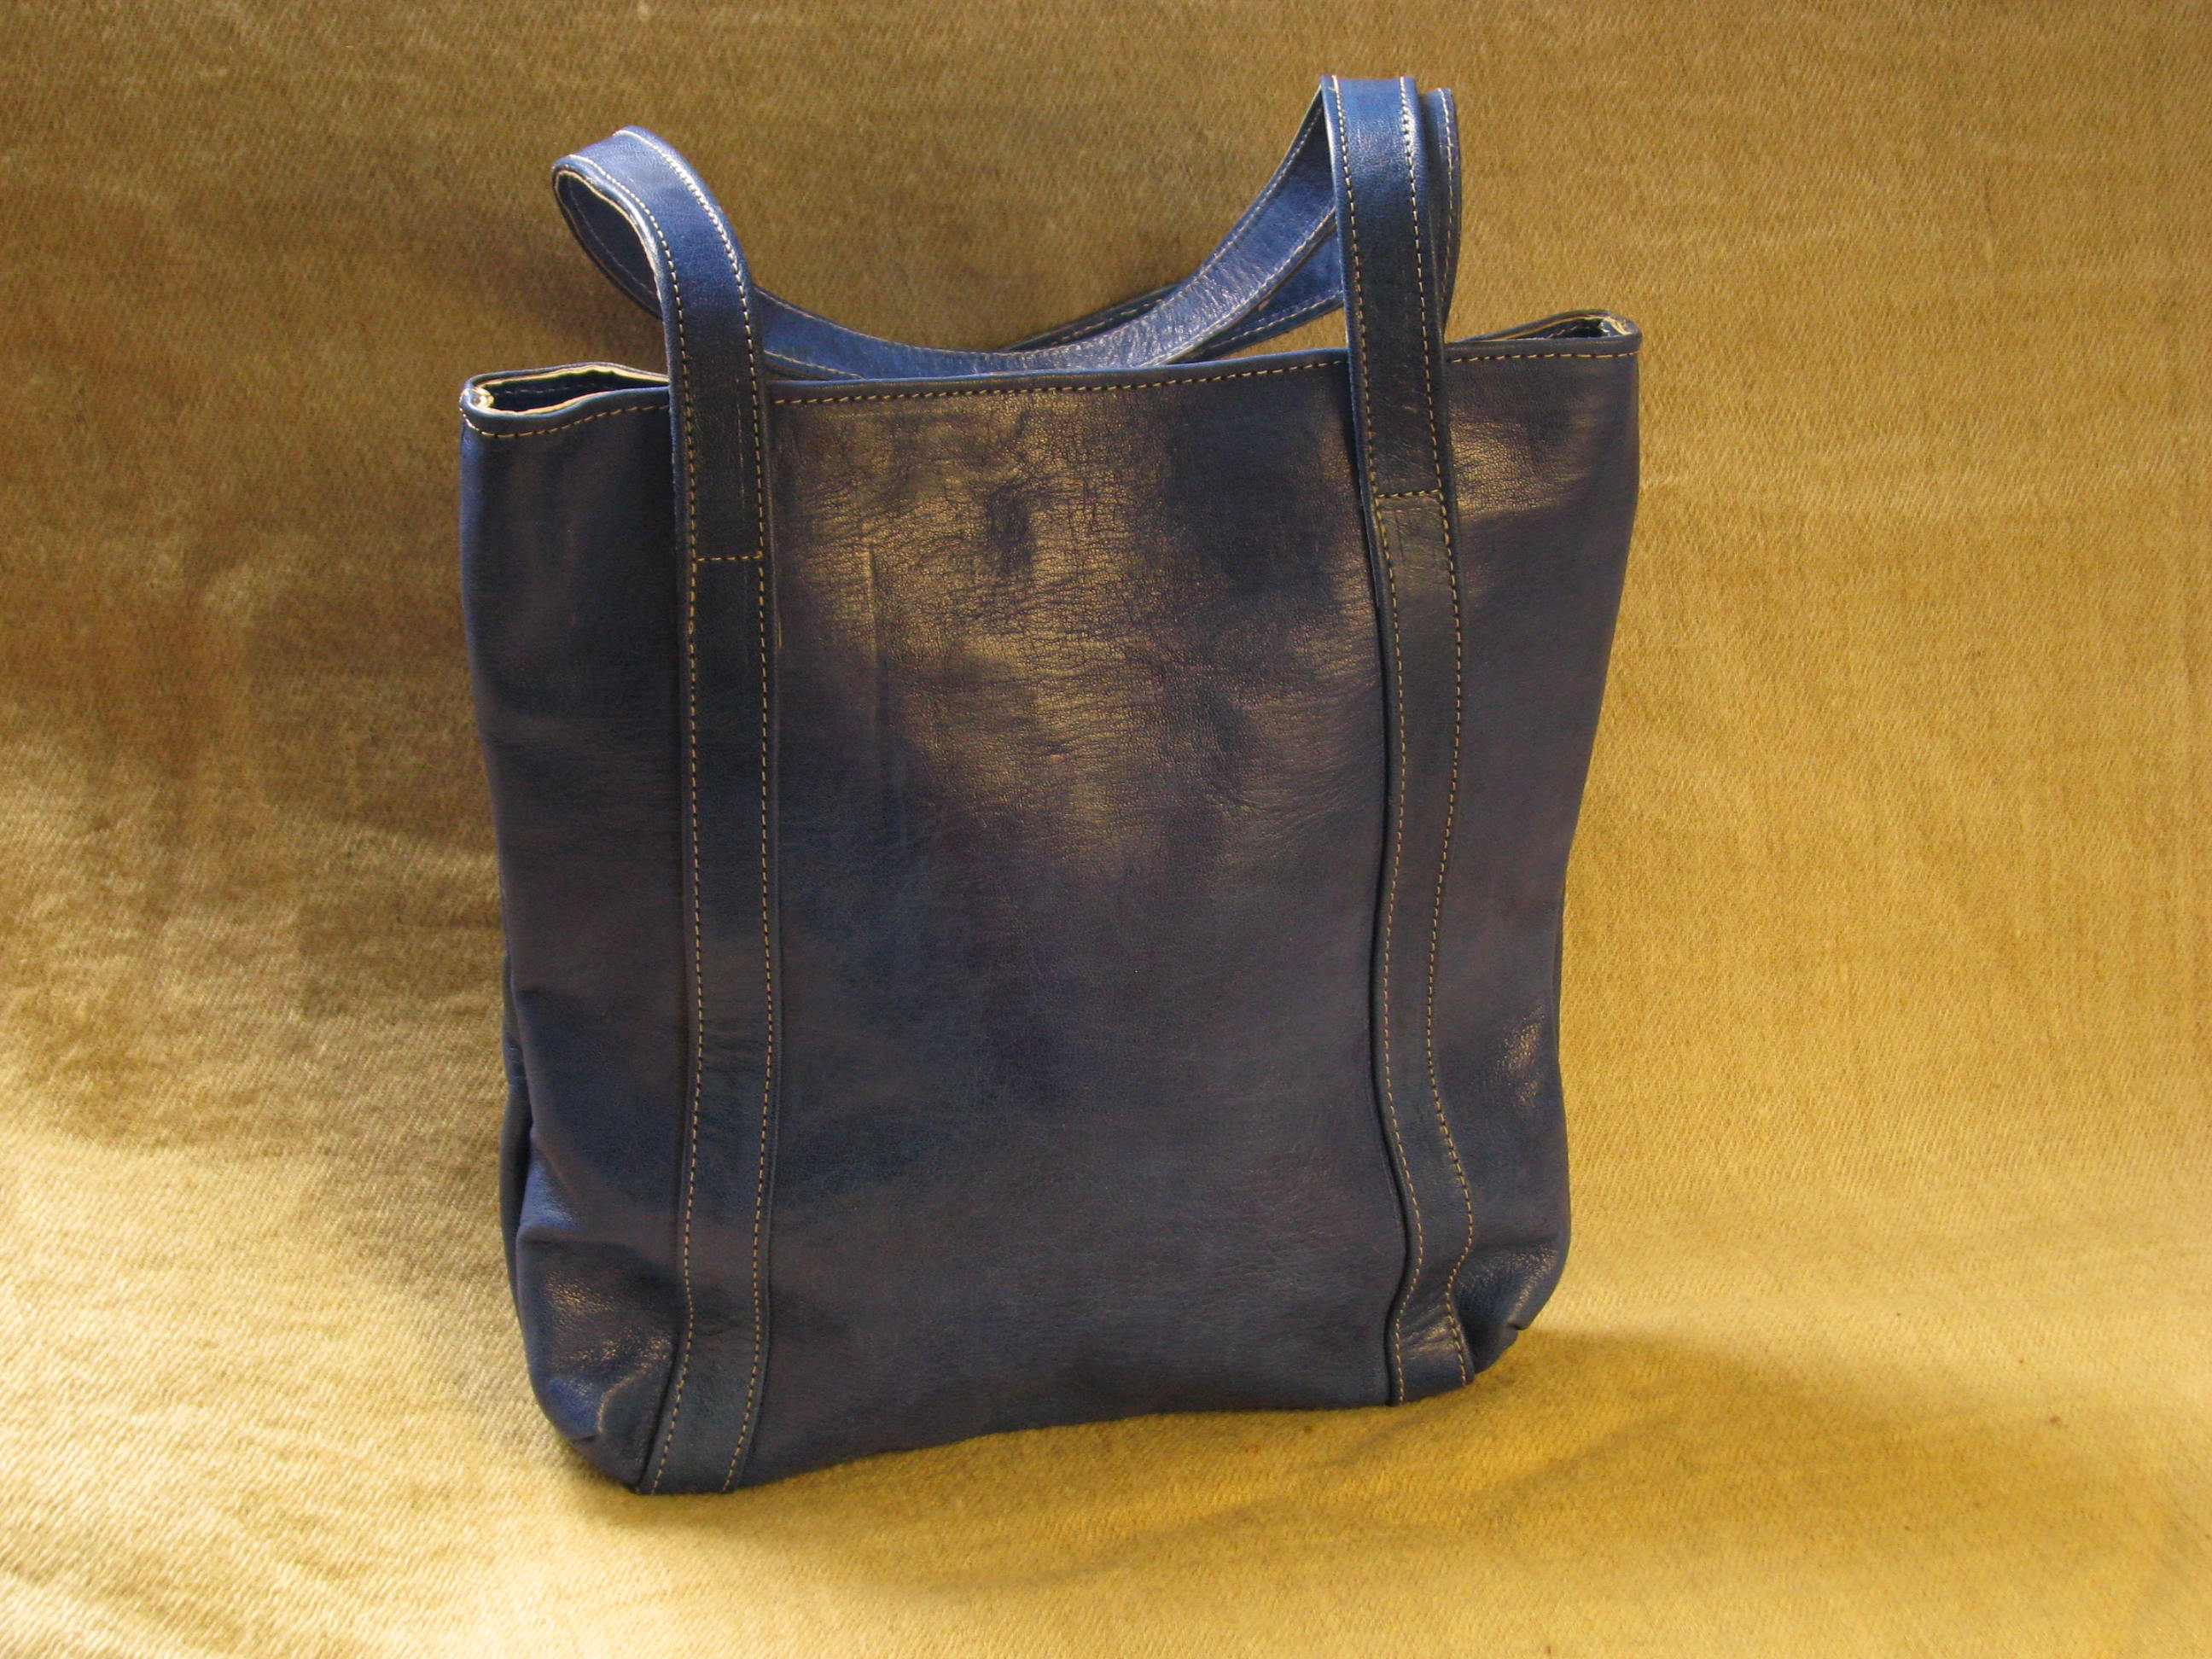 Gundara - Missy Simple Africa - simple leather shopping bag - Burkina Faso - fair trade